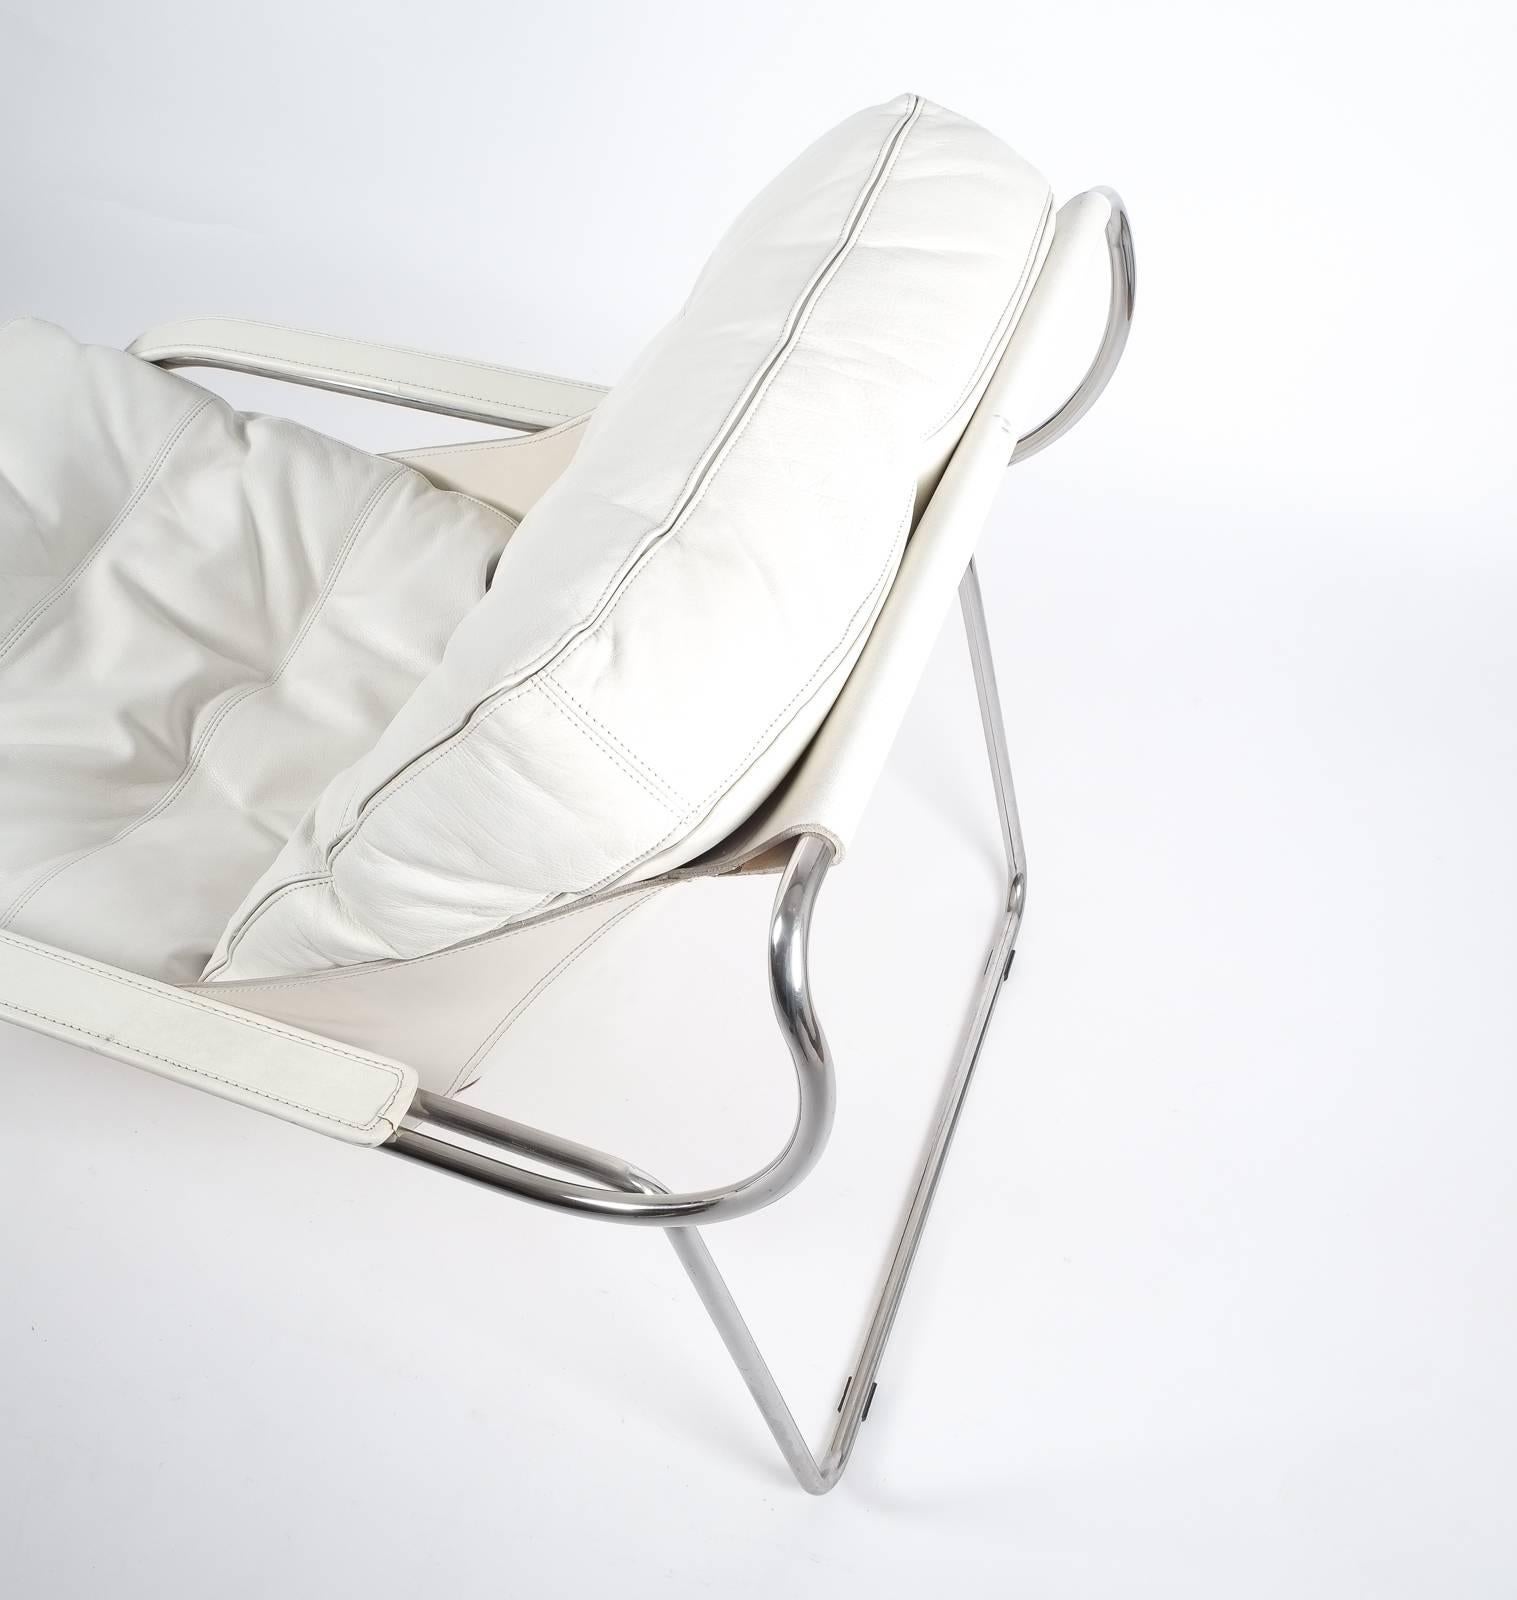 Polished Marco Zanuso Maggiolina White Leather Chair by Zanotta, 1947 For Sale